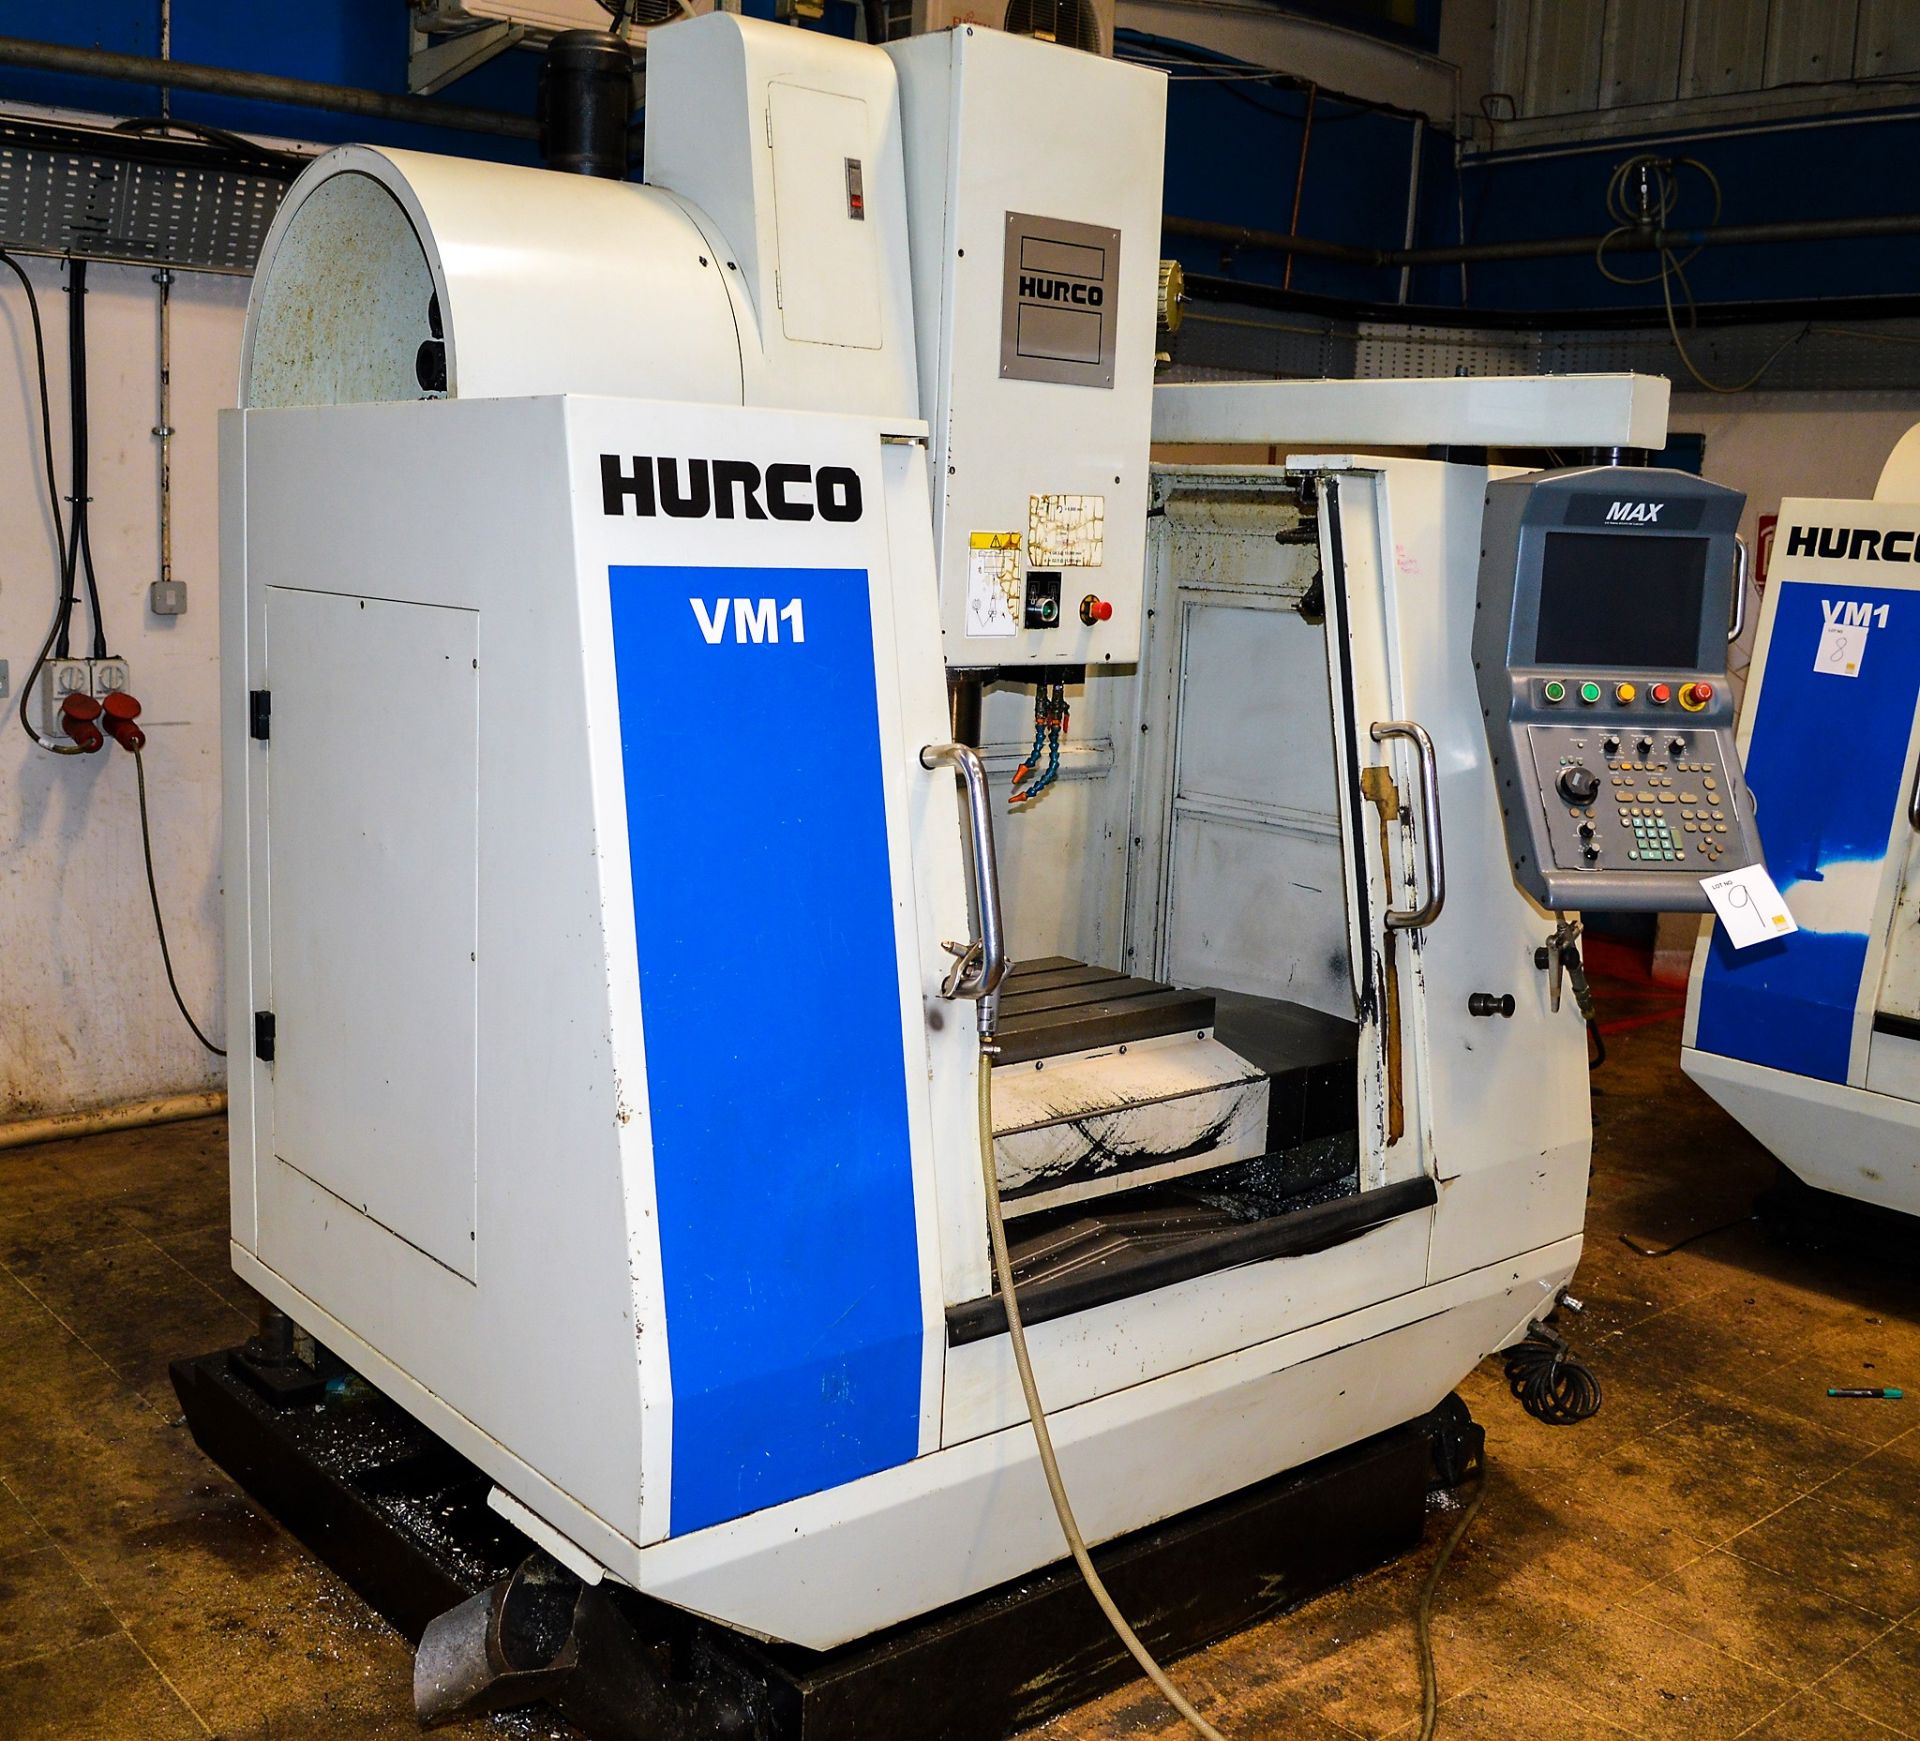 Hurco VM1 CNC vertical machine centre Year: 2005 S/N: 10968 c/w 30 inch x 14 inch, 20 station tool